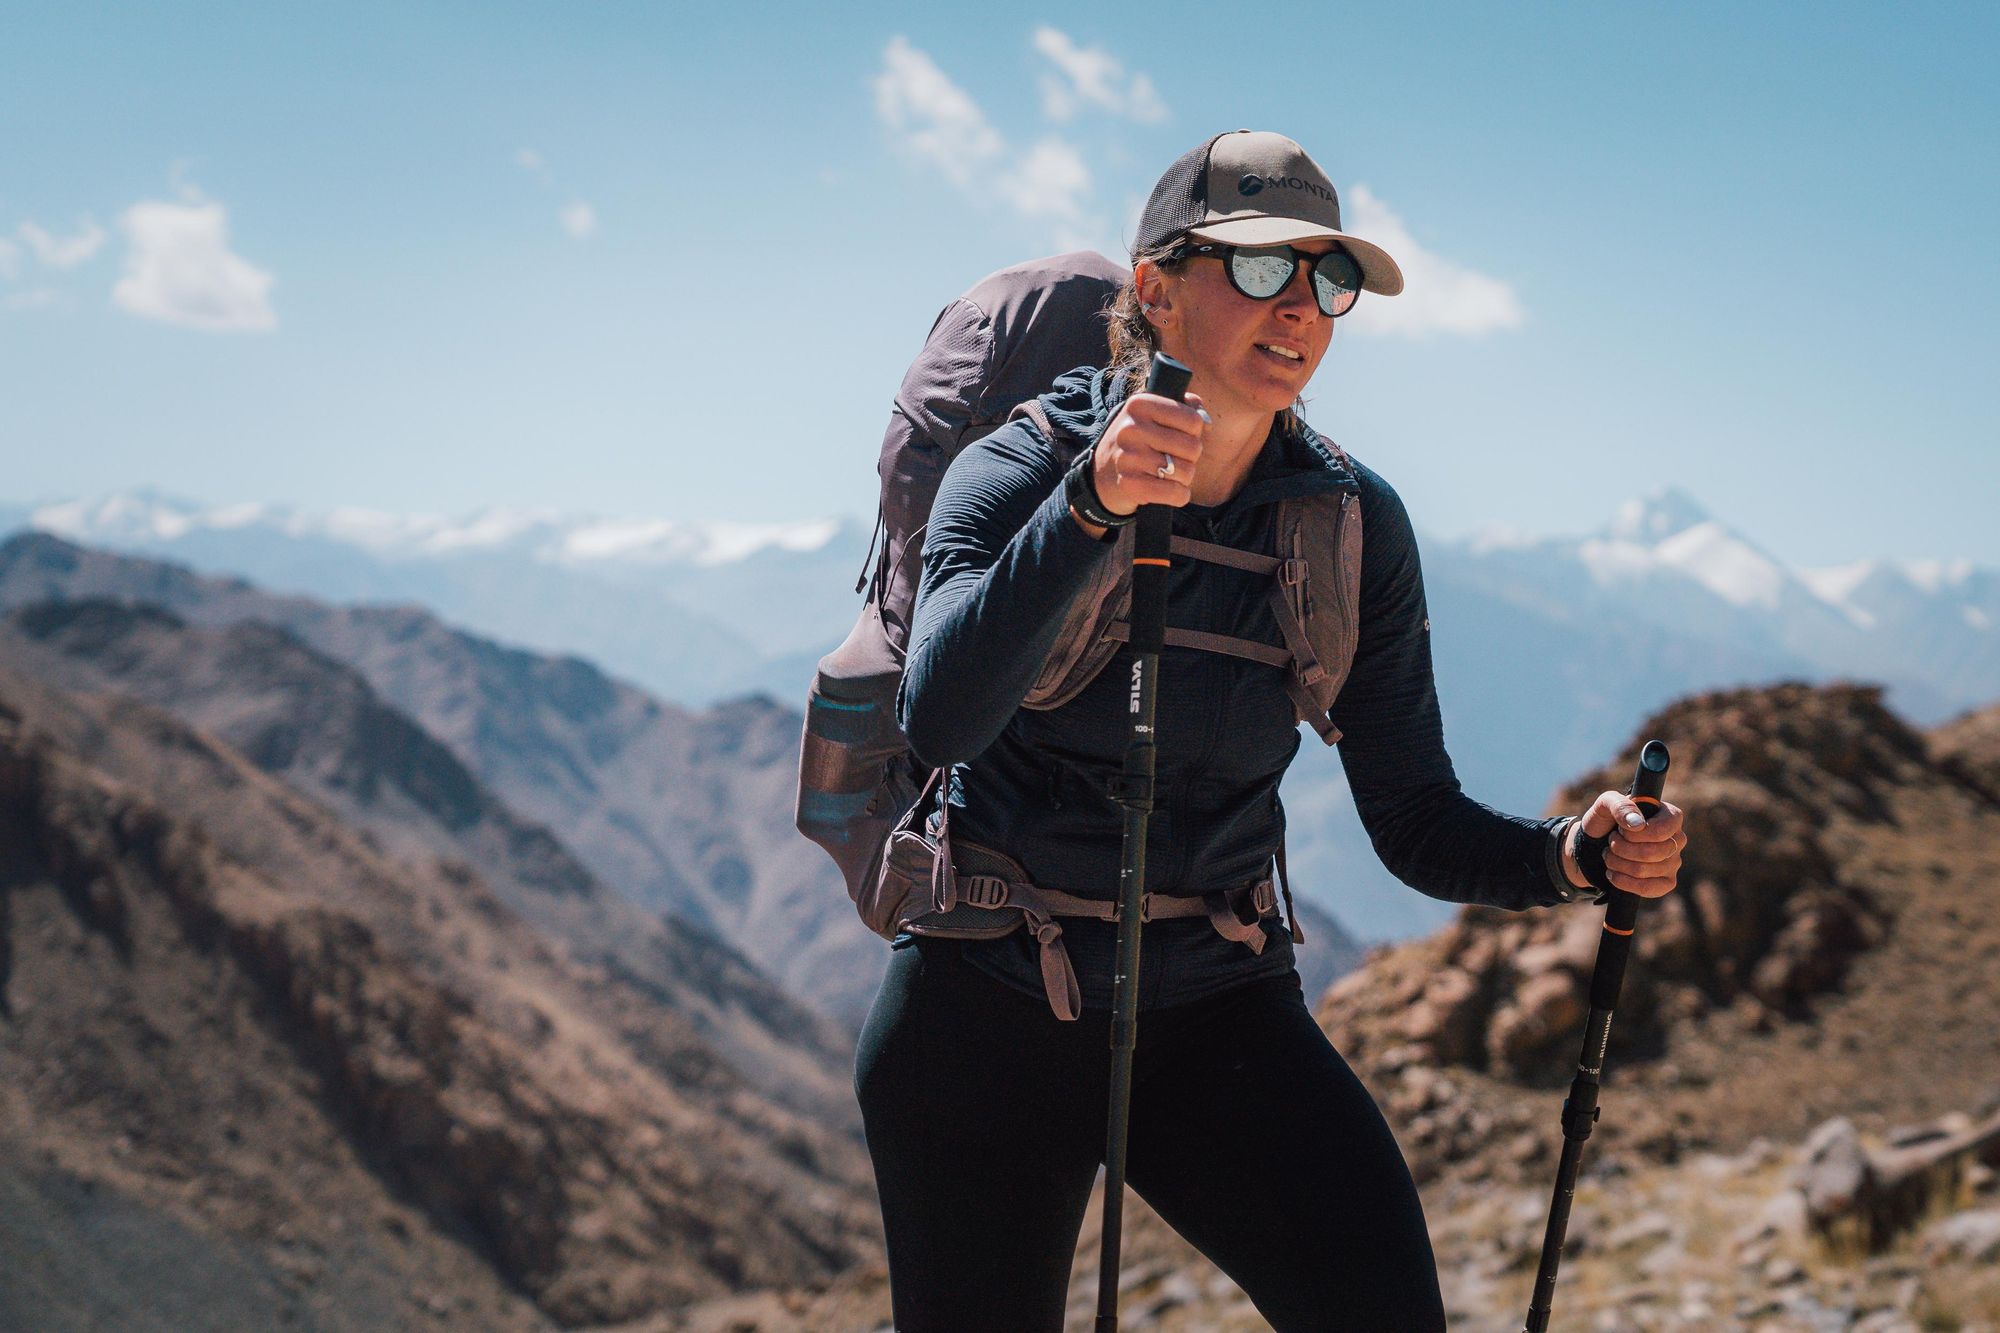 Jenny Tough fastpacking through the mountains of Kyrgyzstan. Photo: Montane